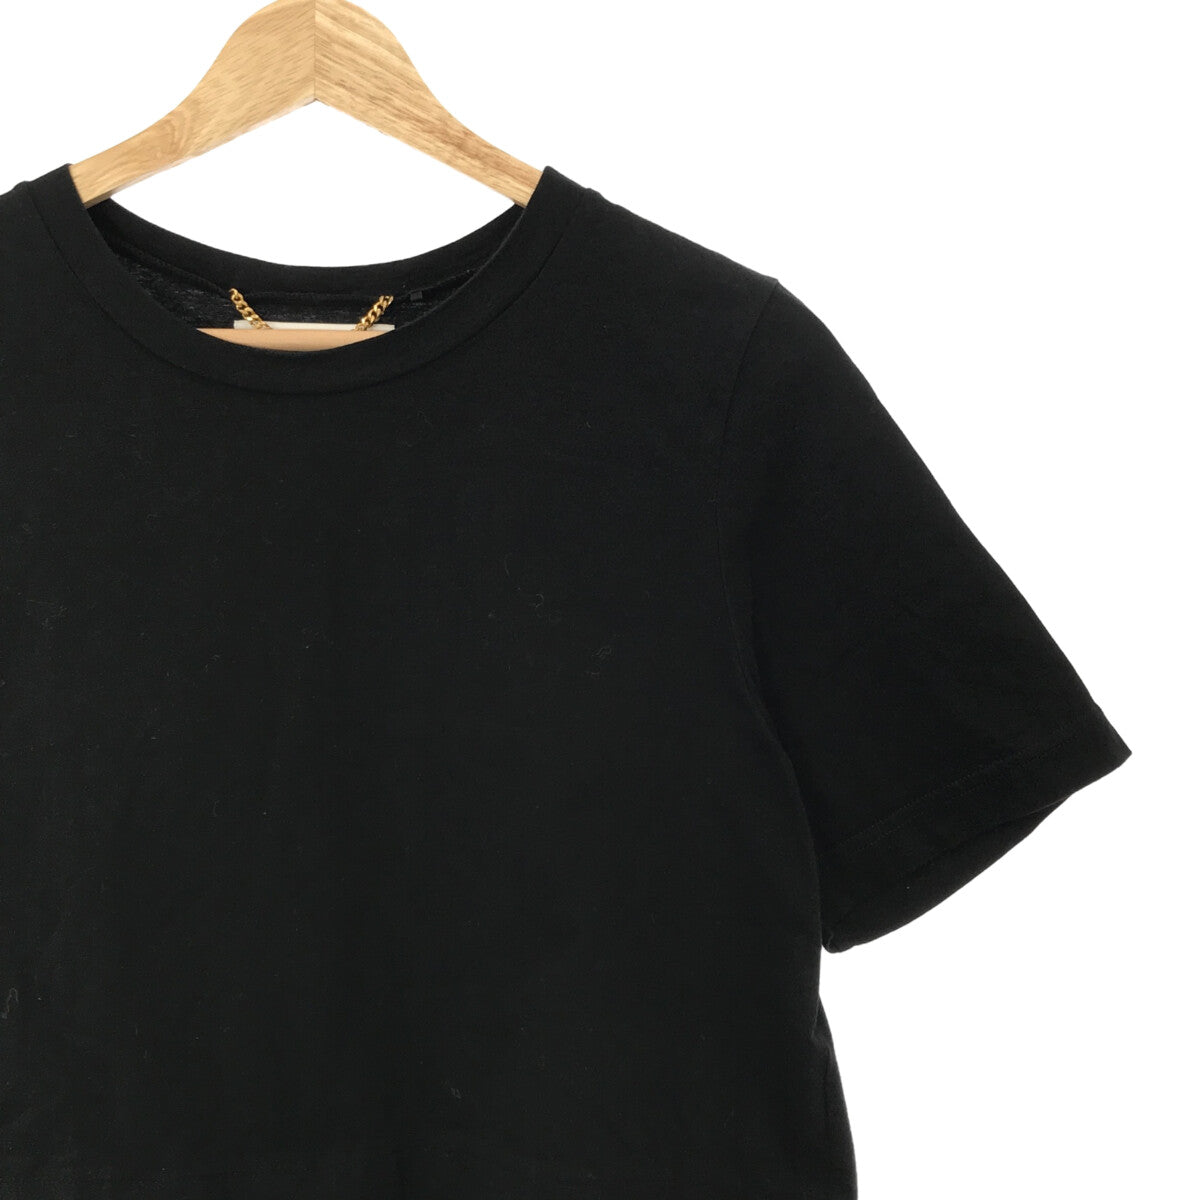 MUVEIL / ミュベール | フリルデザイン カットソー Tシャツ | 38 | ブラック | レディース